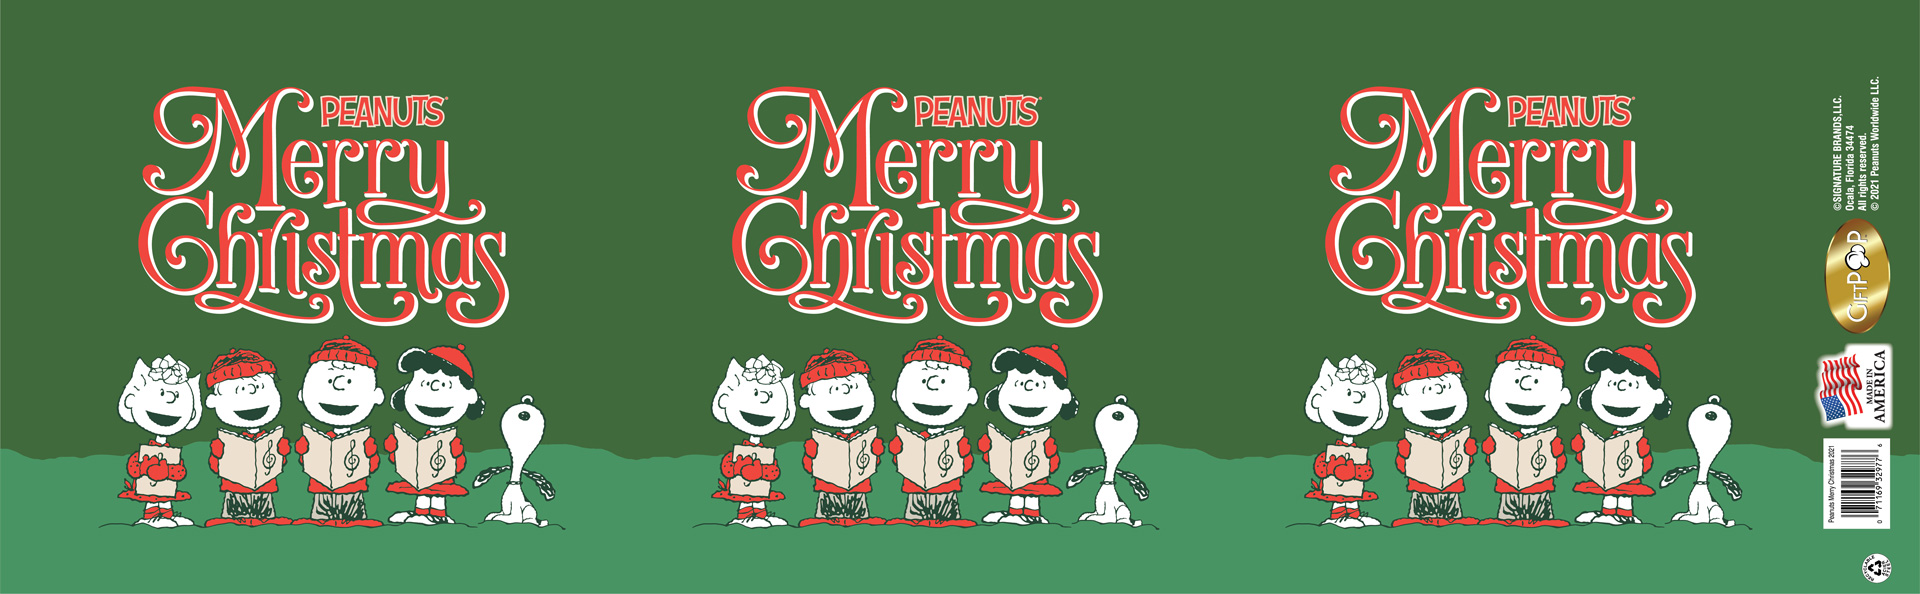 2021-LICENSE-1-Peanuts-Merry-Christmas-FLAT